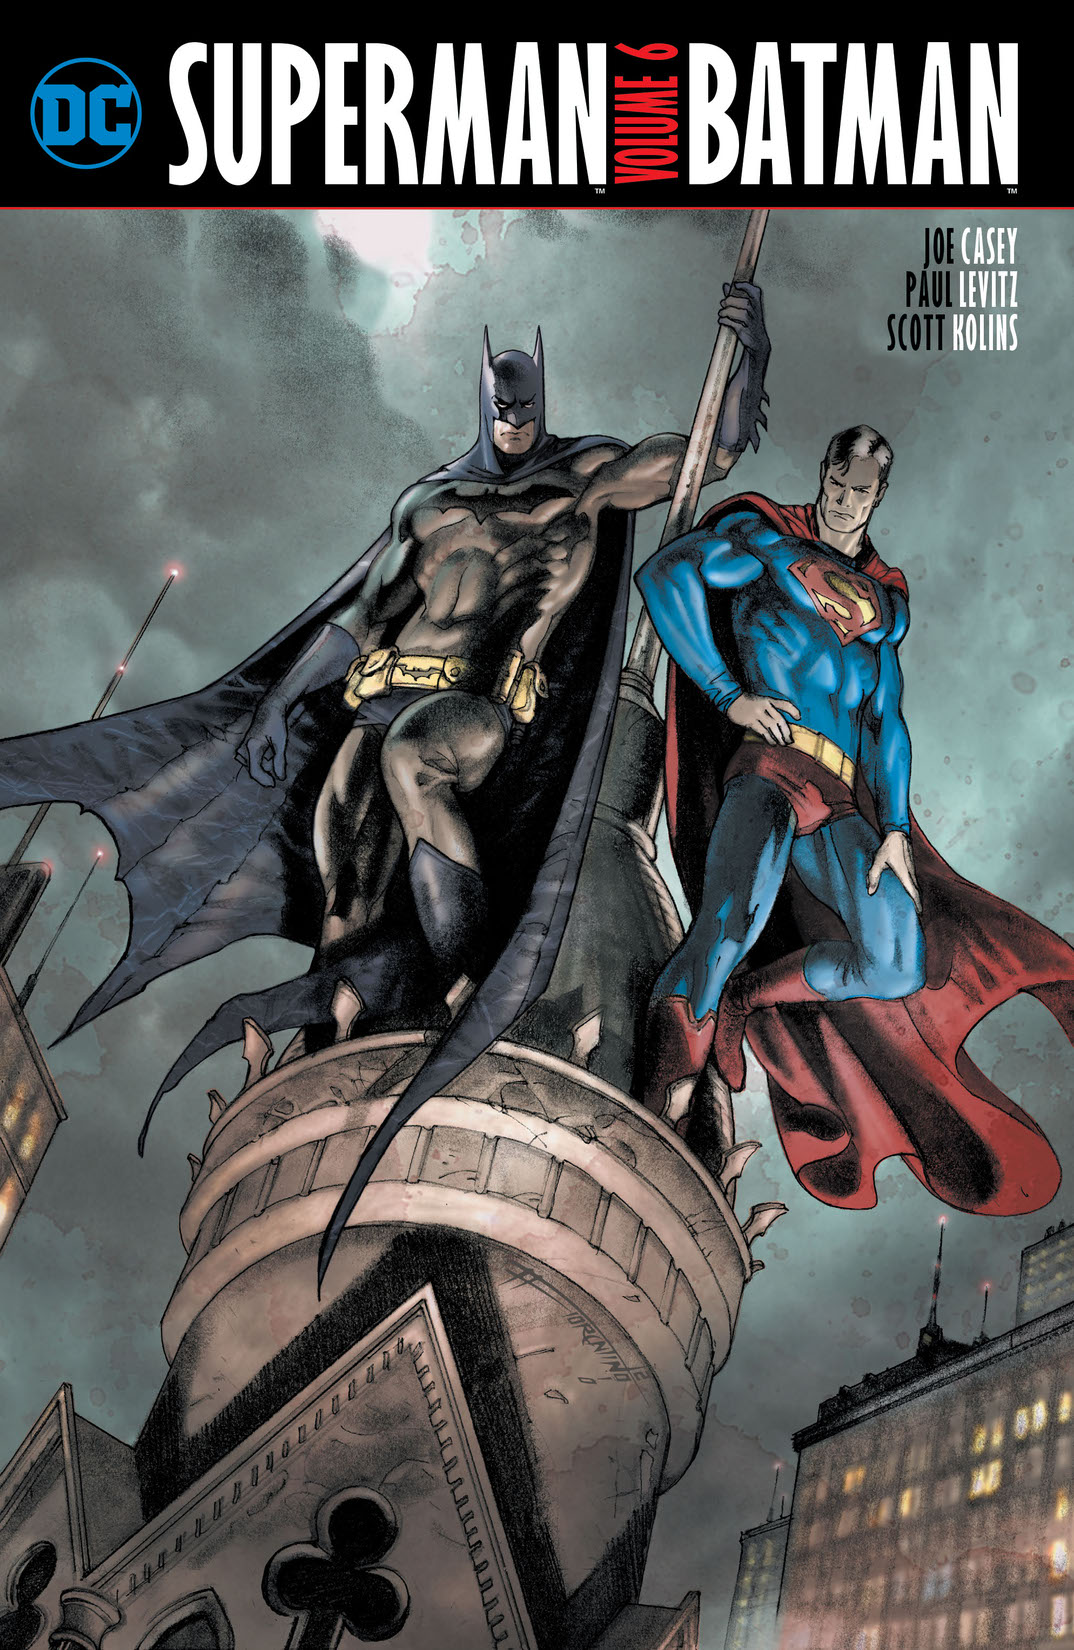 Superman/Batman Vol. 6 preview images